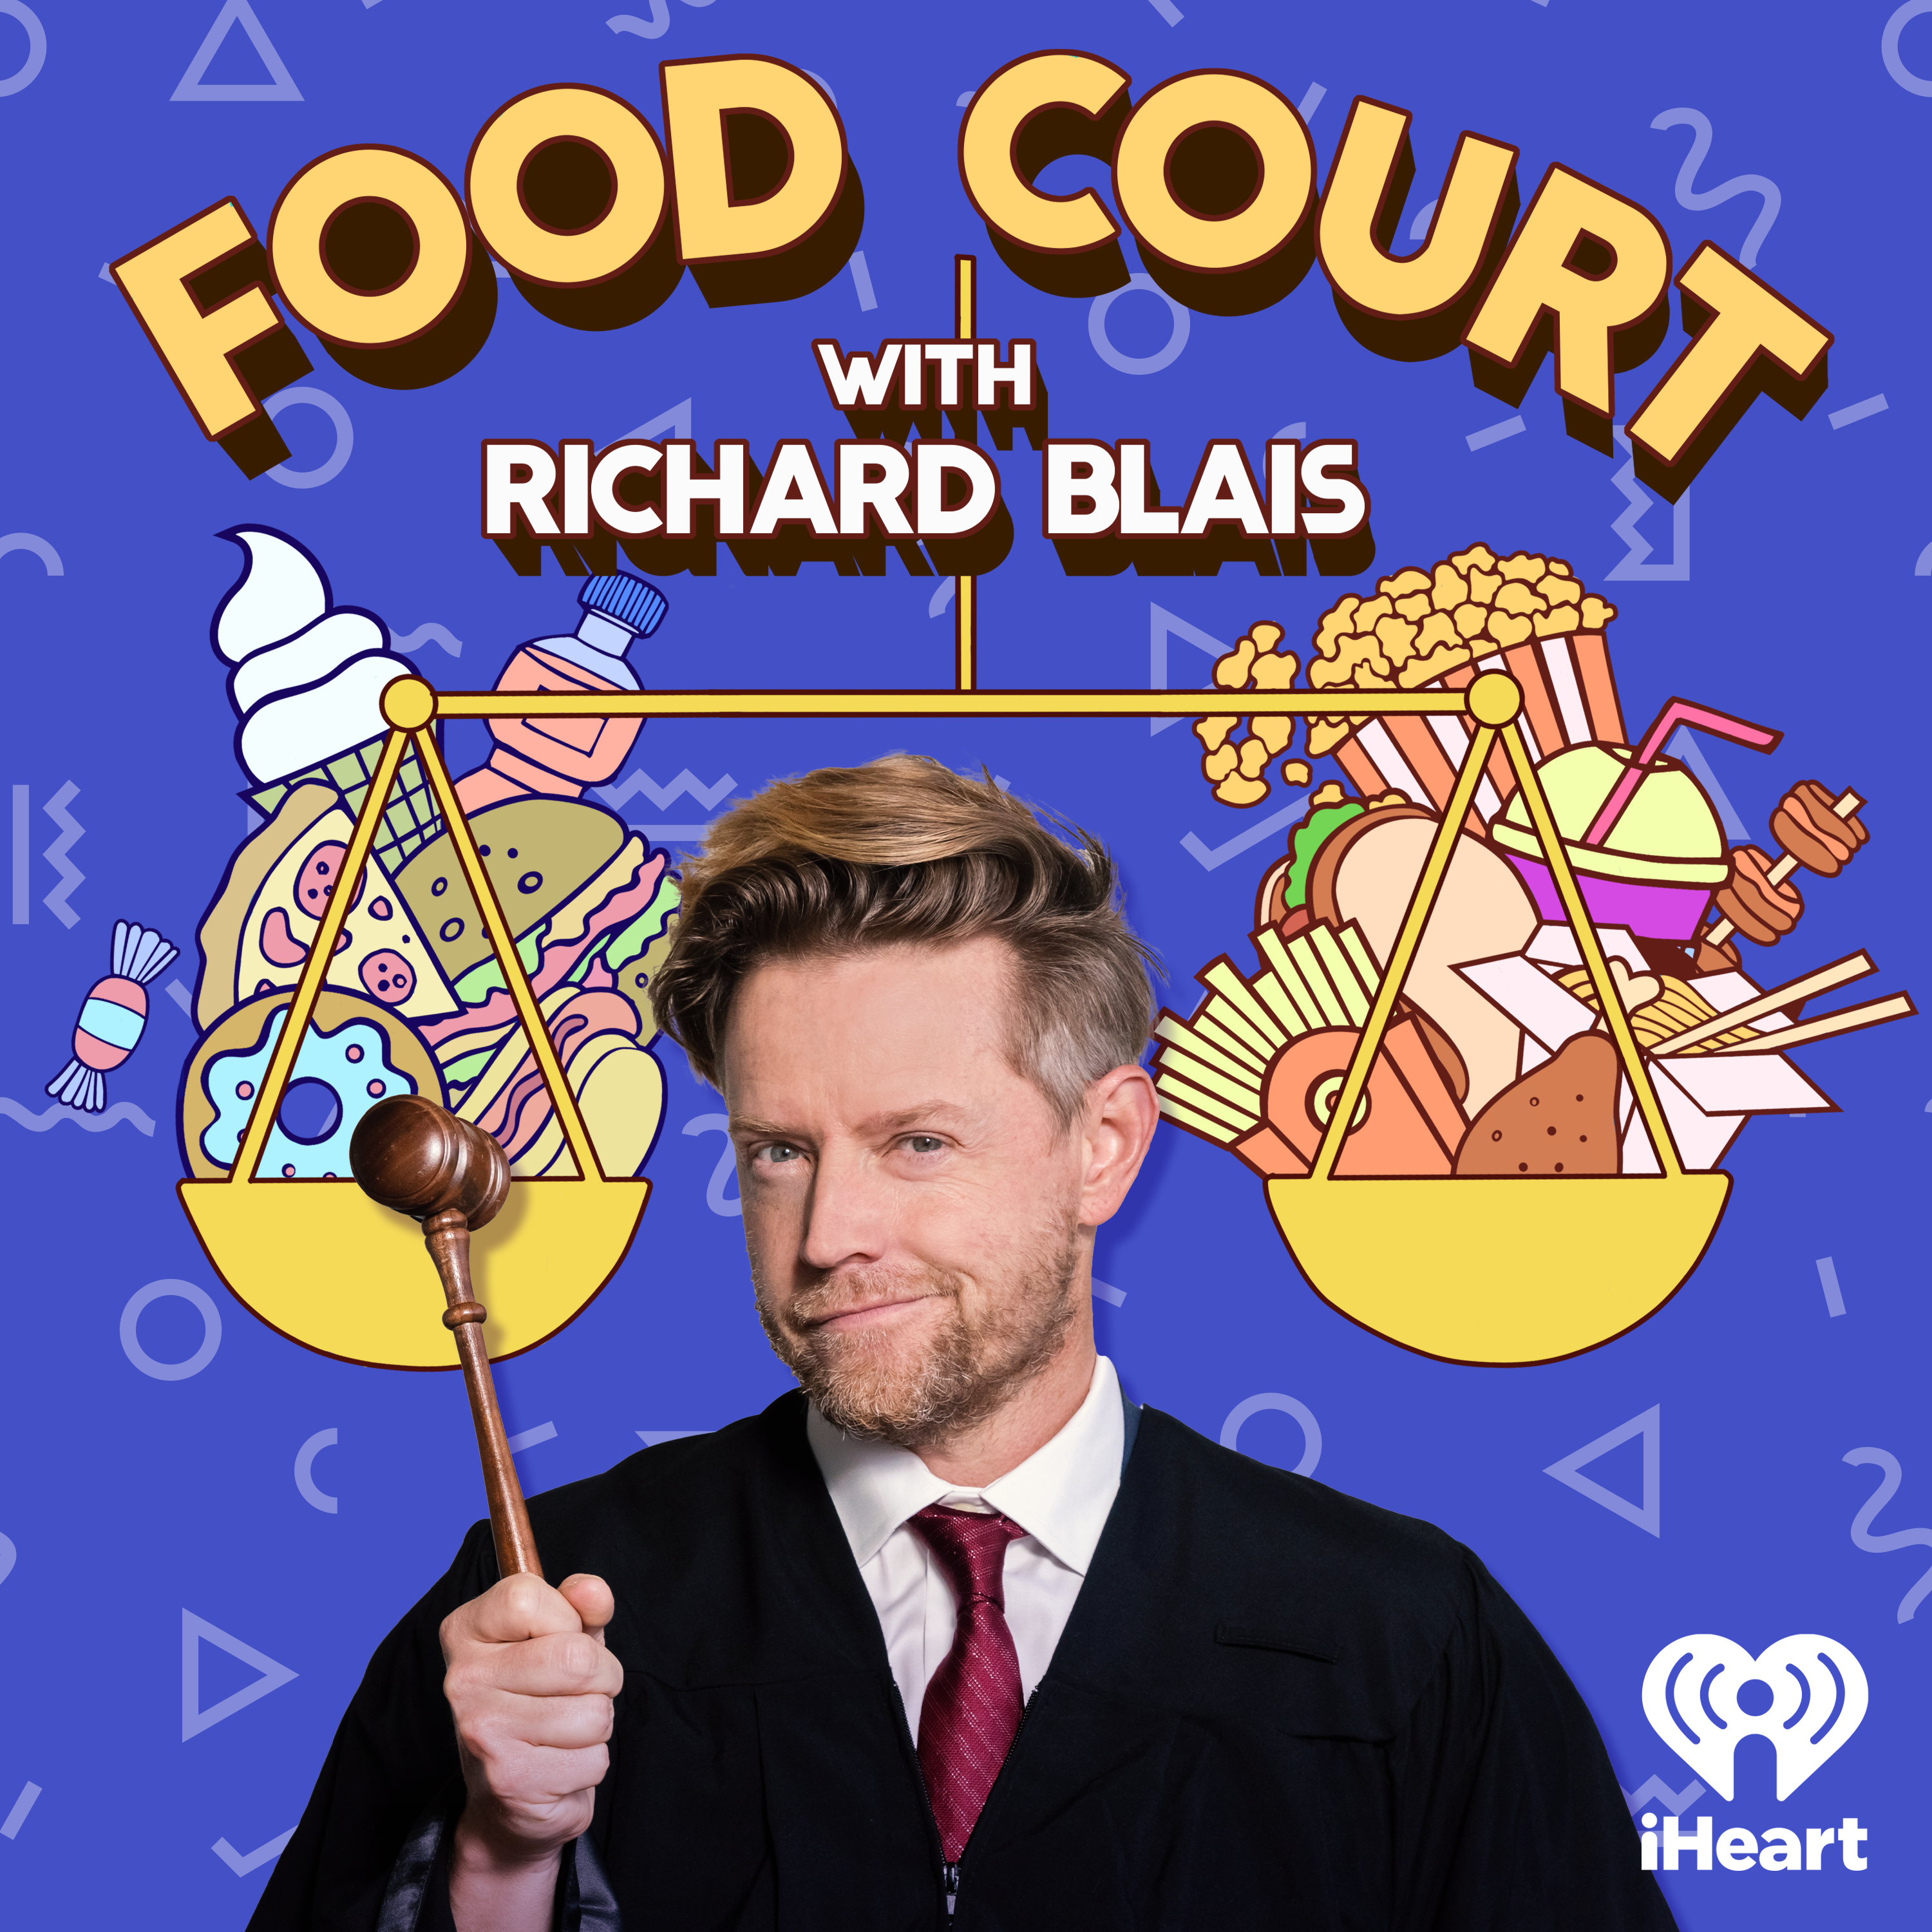 Food Court with Richard Blais Season 2 Trailer!